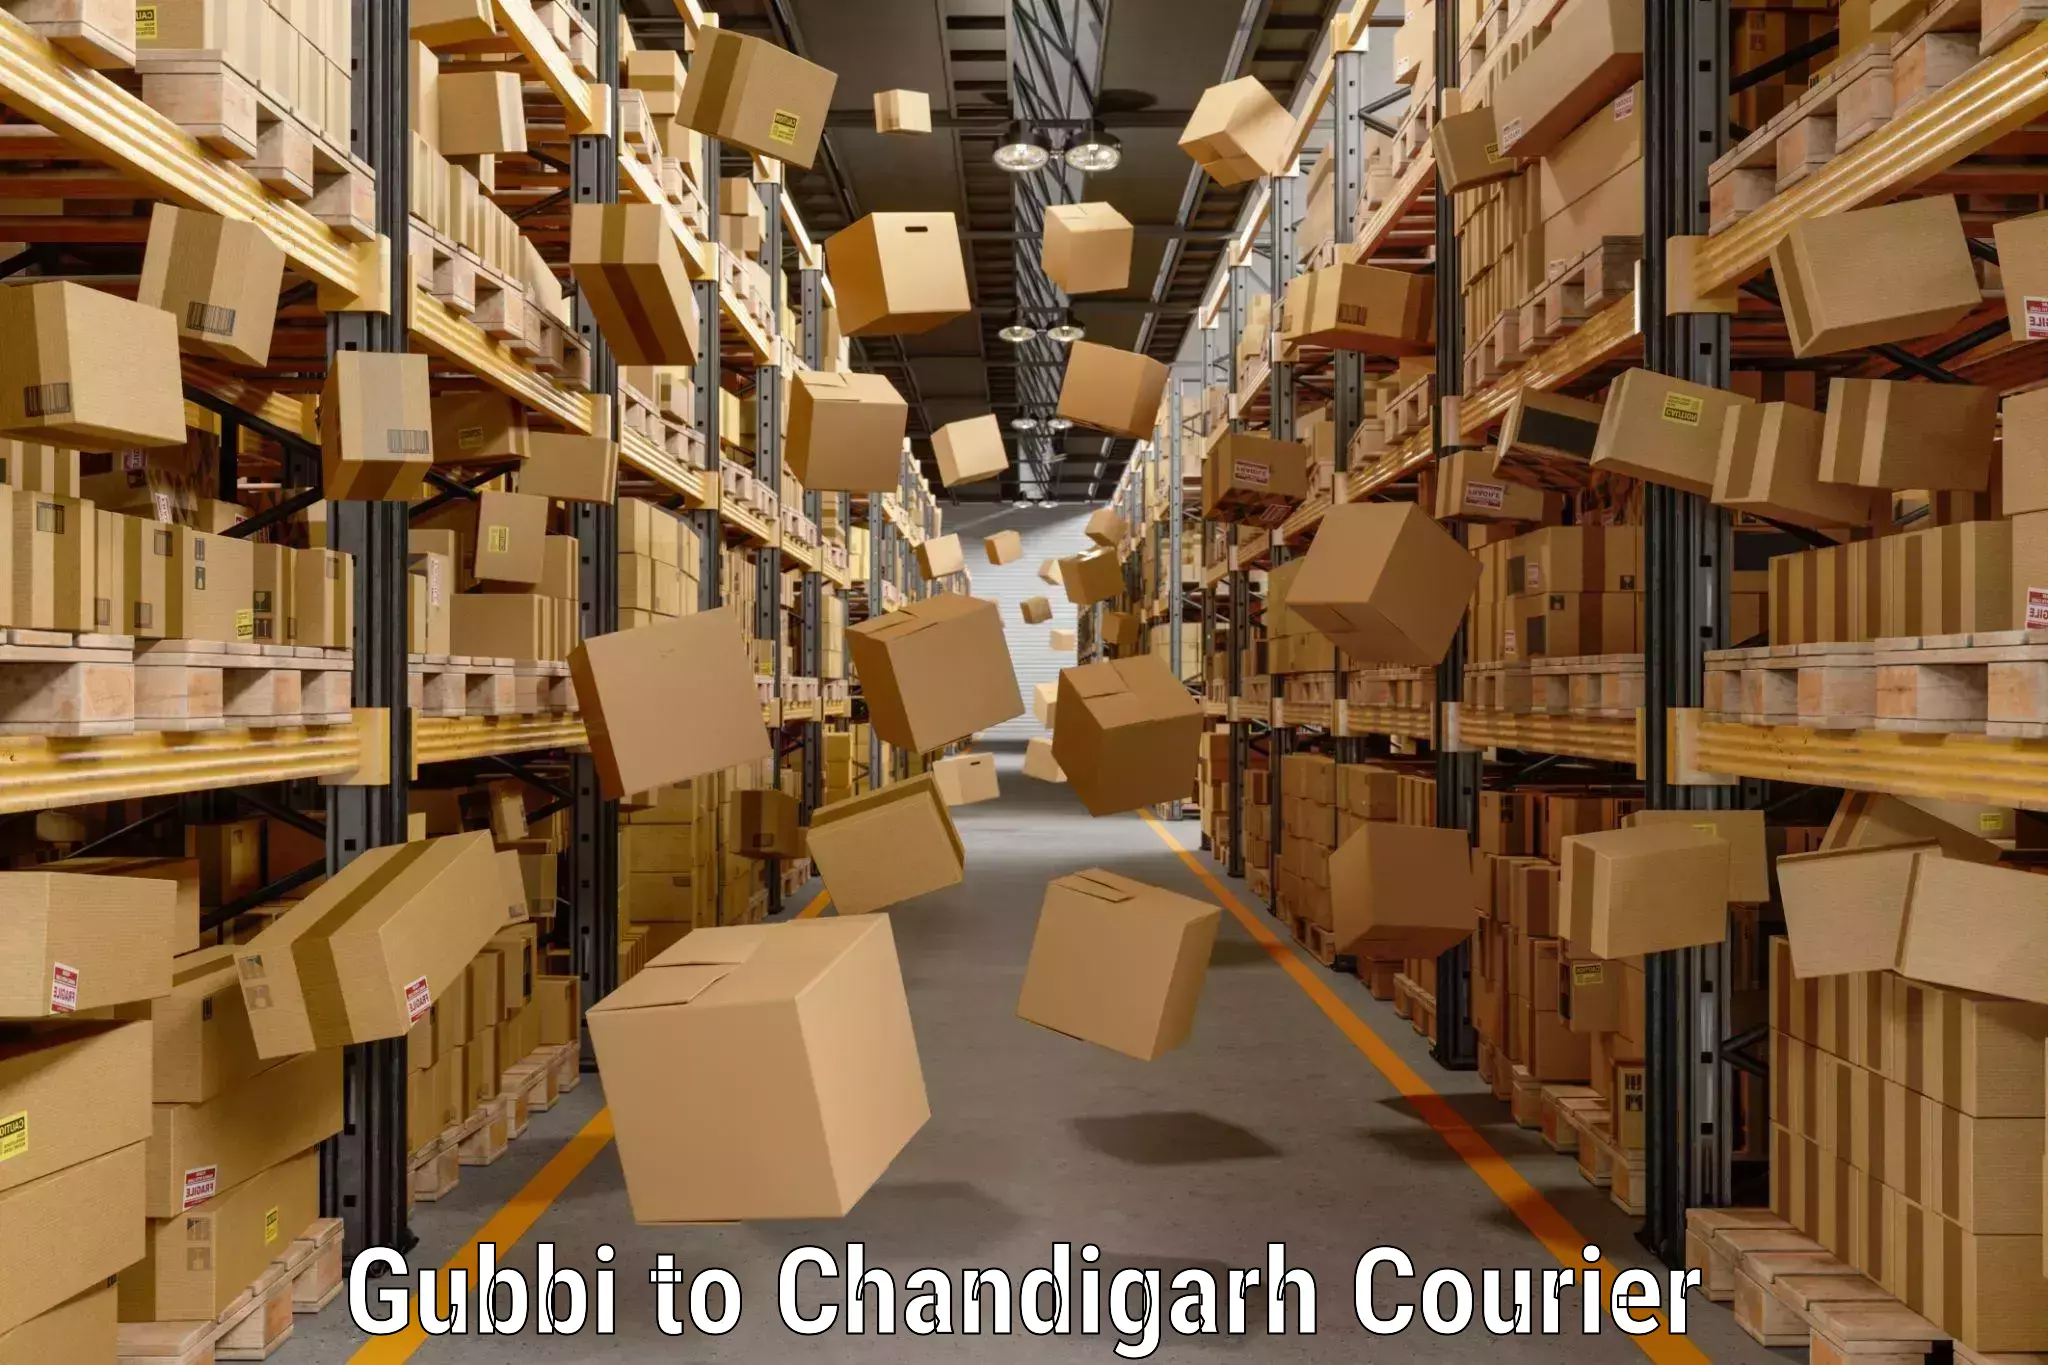 Luggage shipment specialists Gubbi to Chandigarh